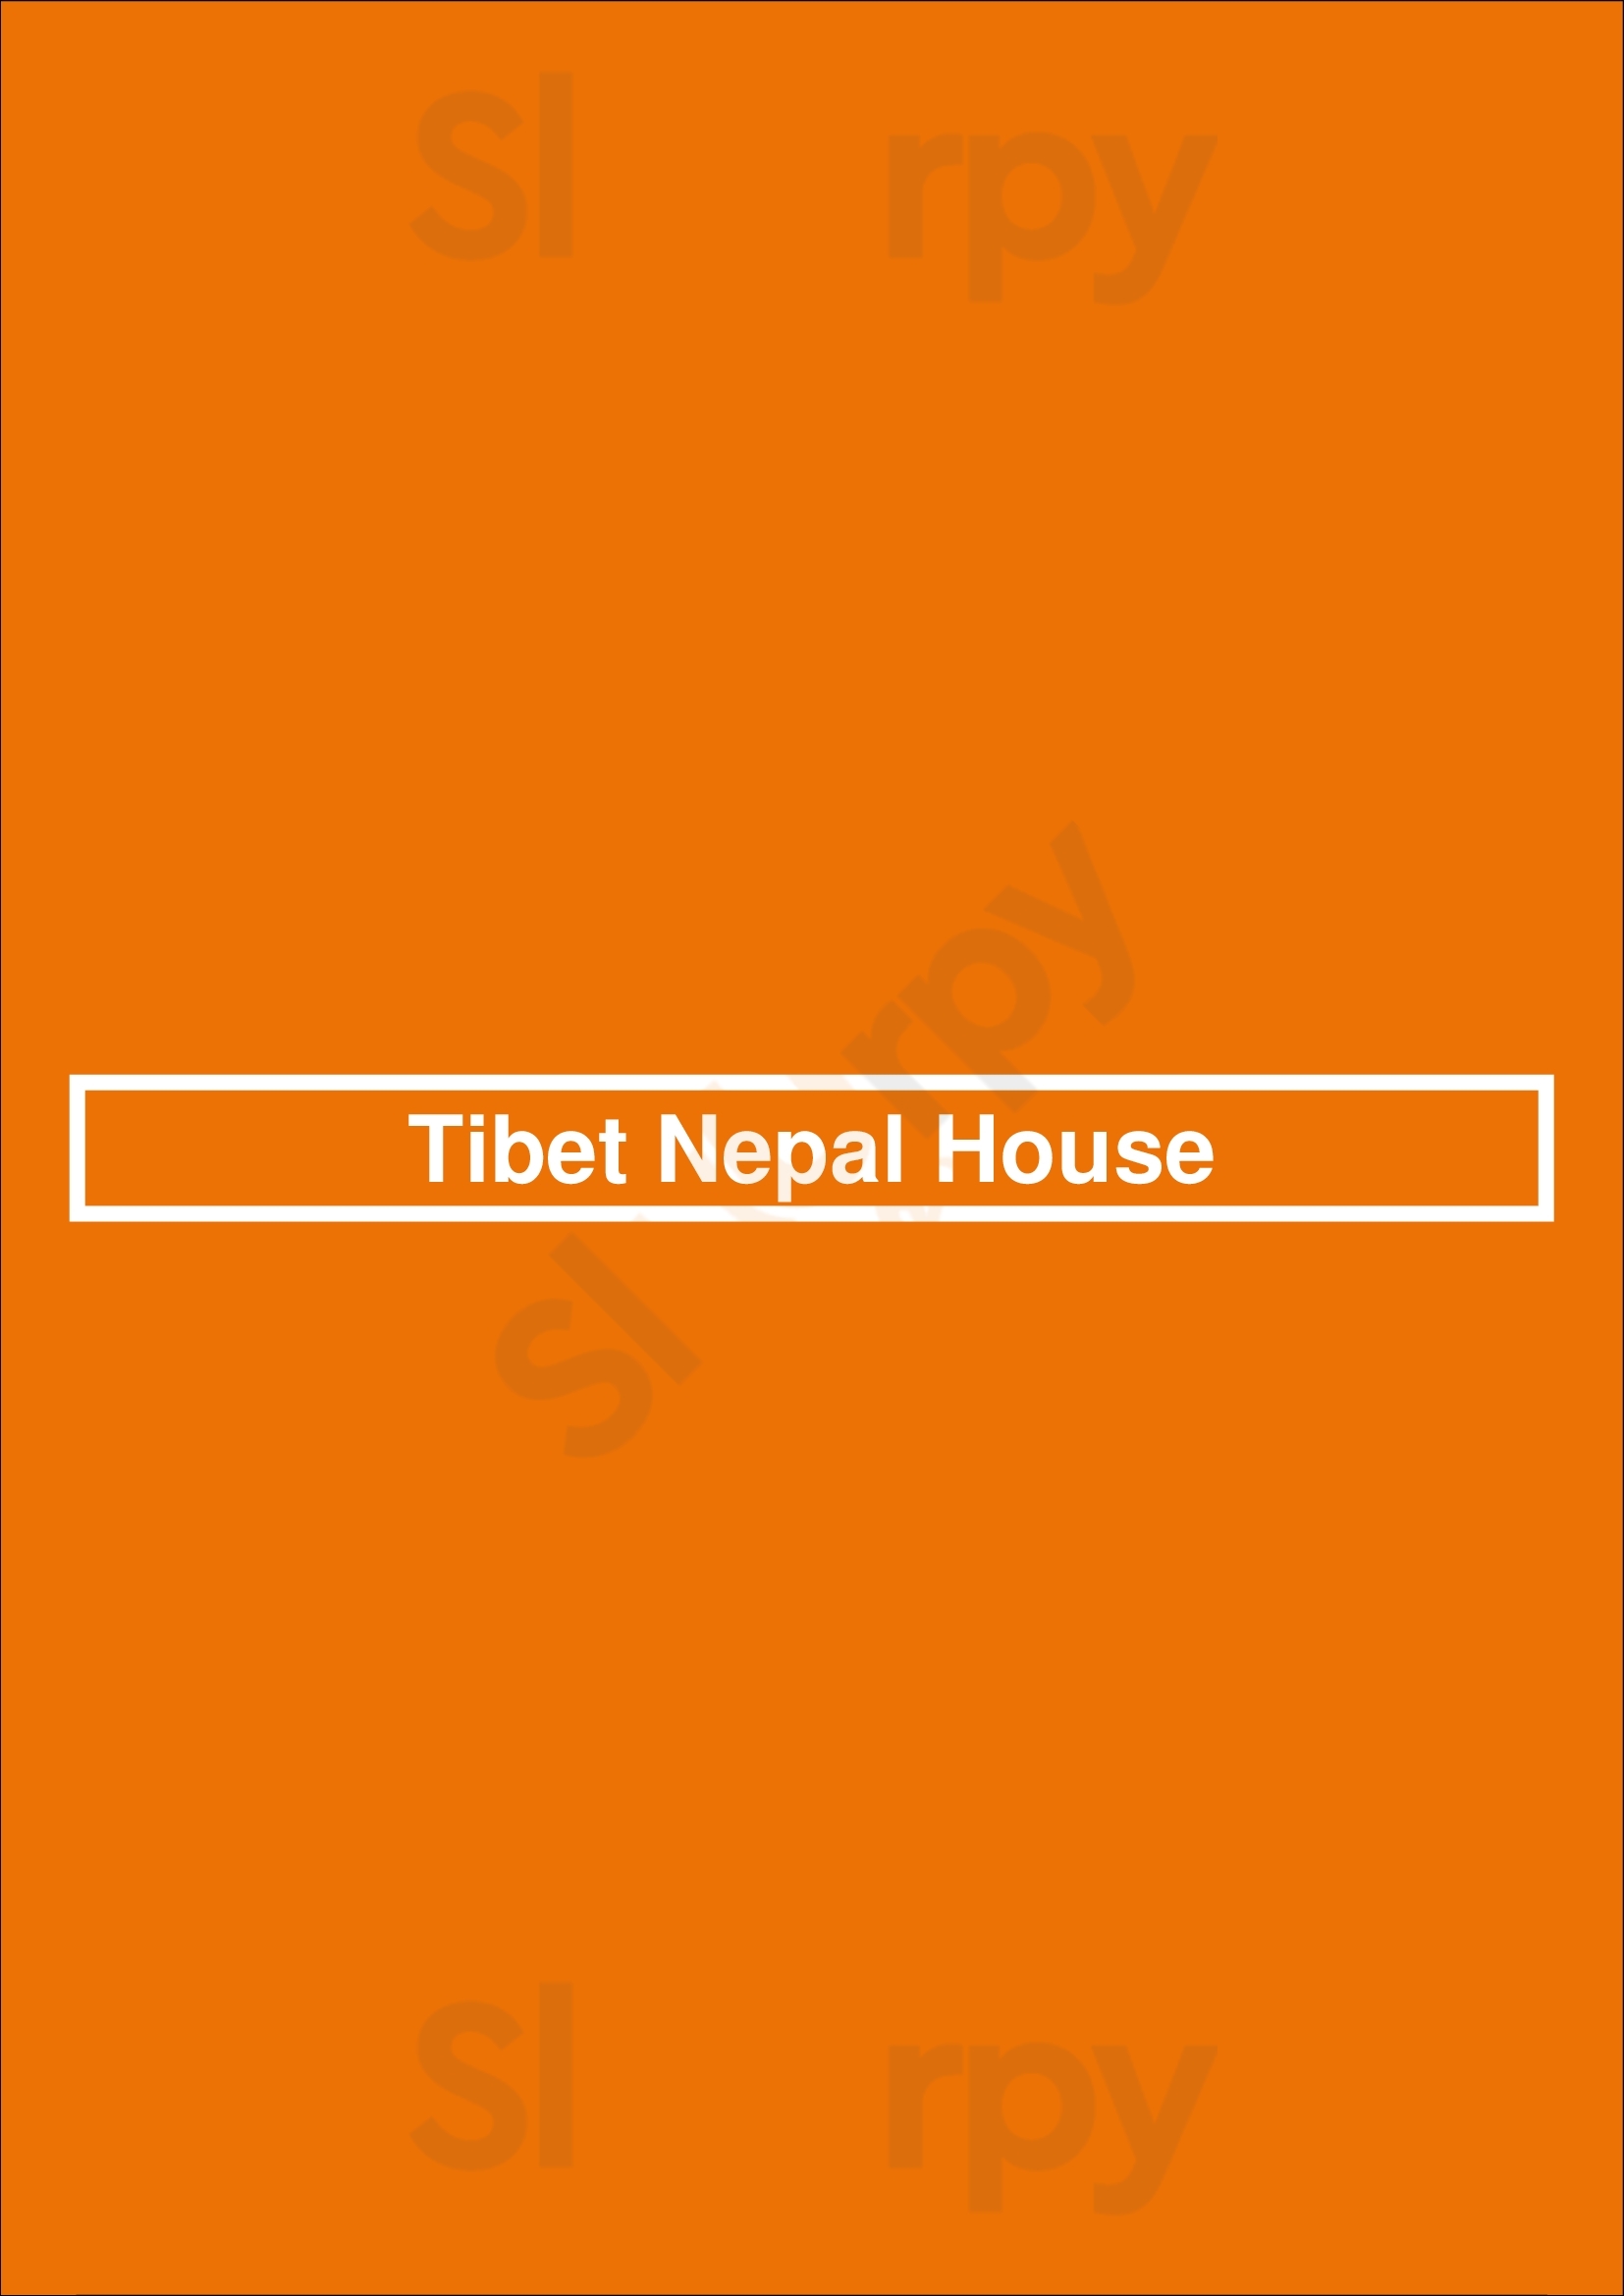 Tibet Nepal House Pasadena Menu - 1